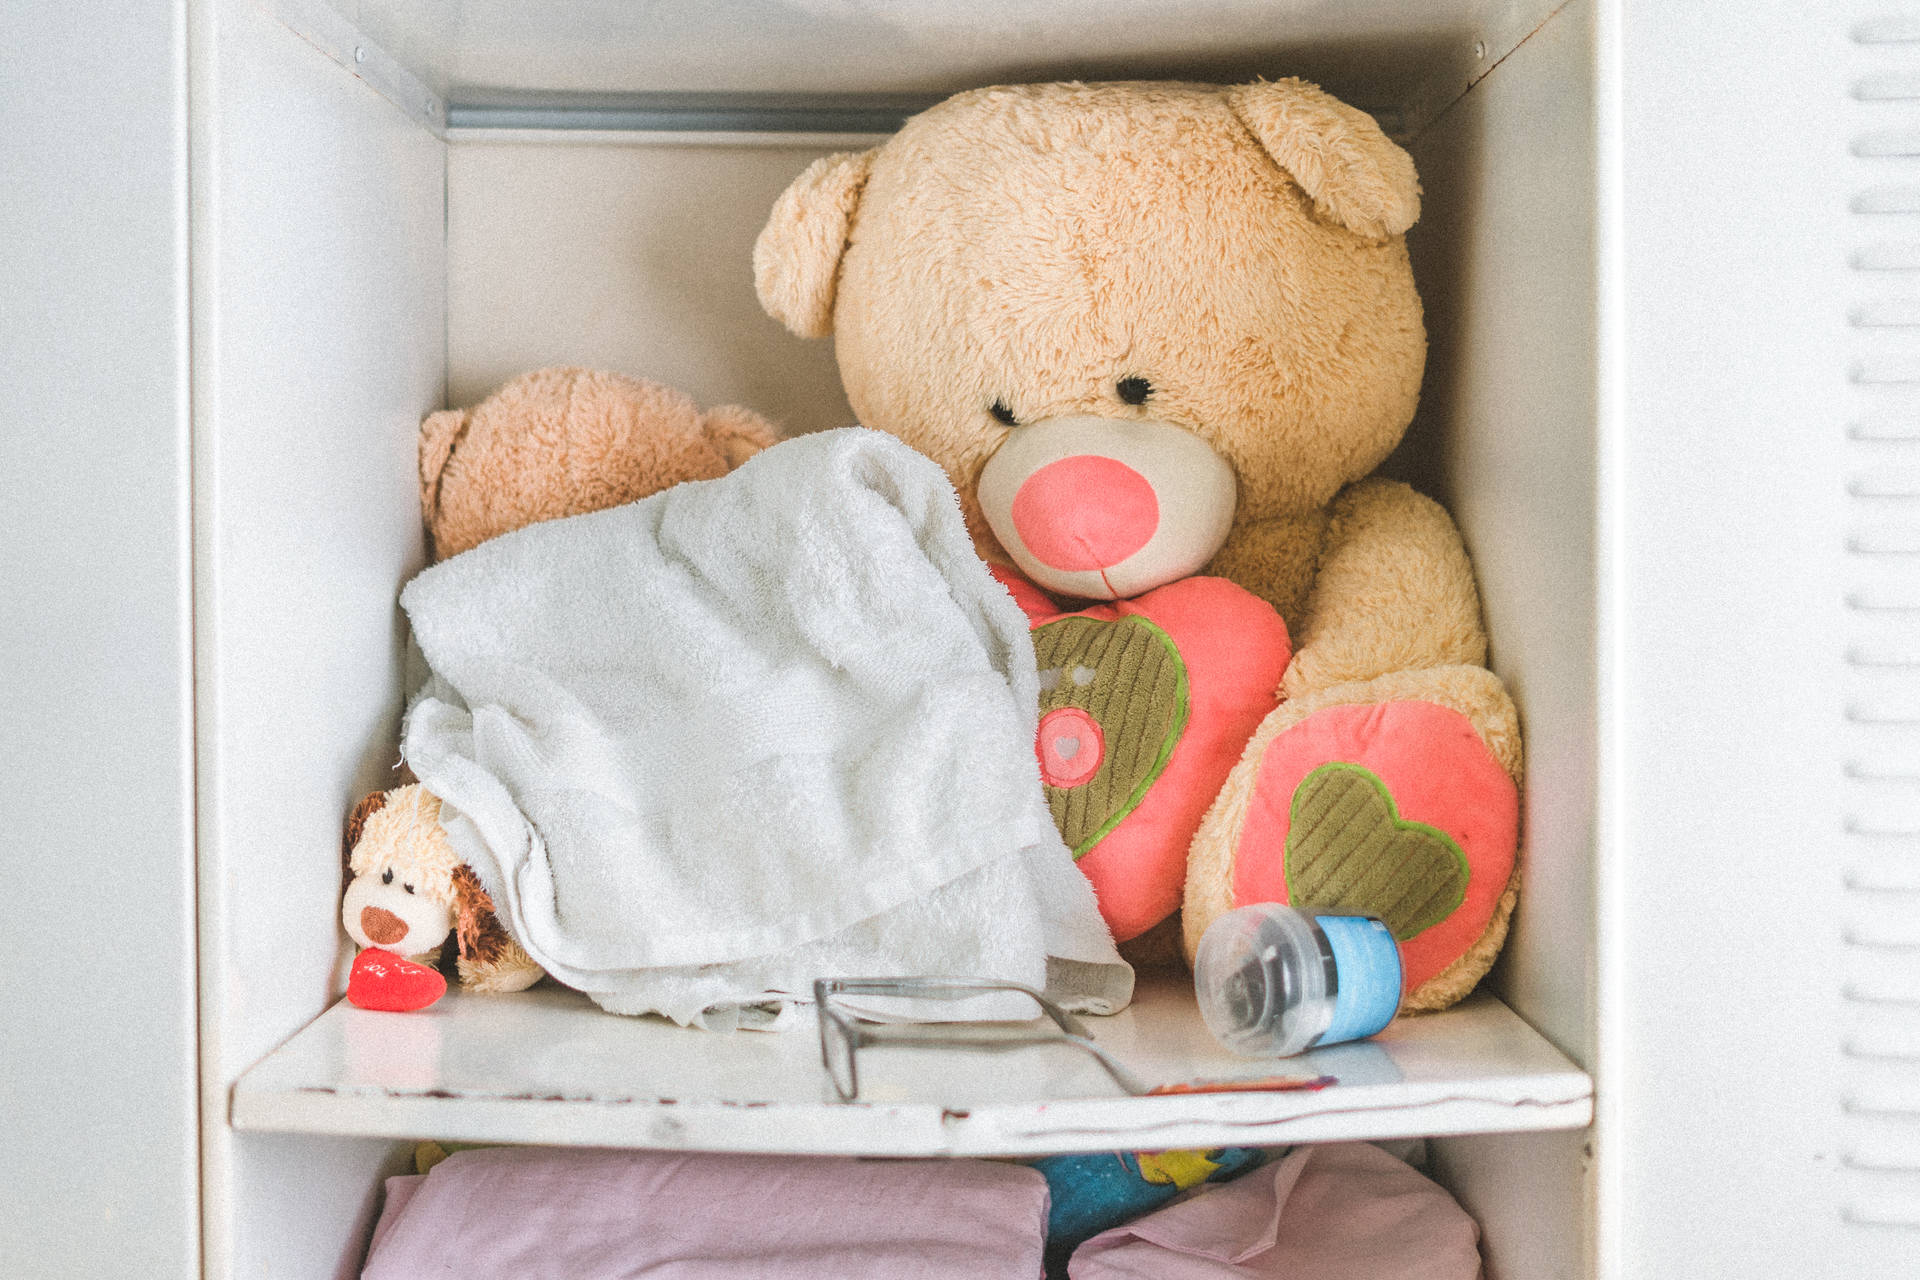 Cute Teddy Bear In A Cabinet Background